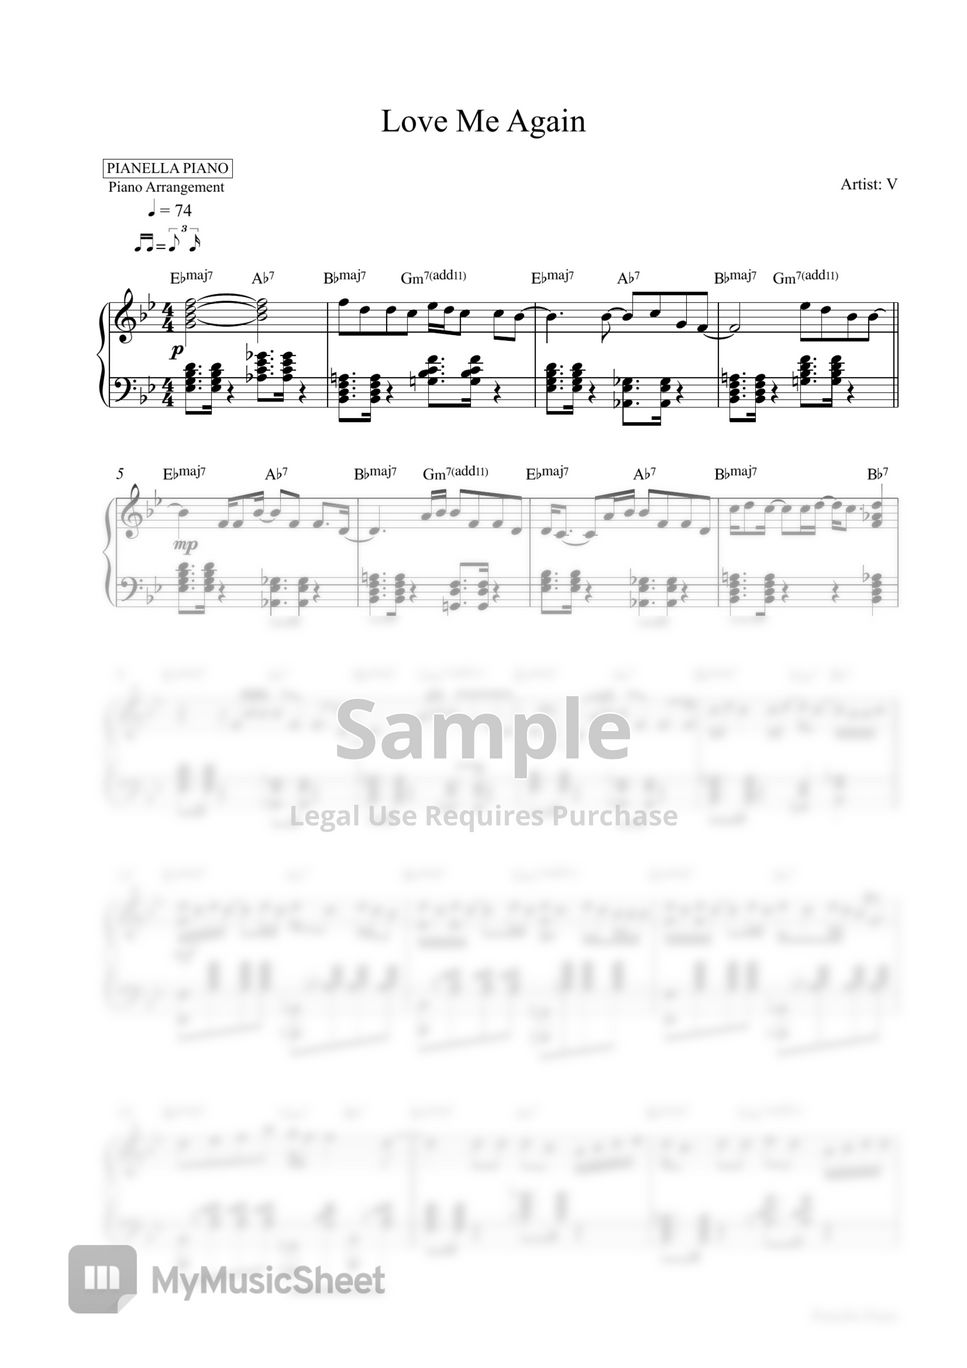 V - Love Me Again (Piano Sheet) by Pianella Piano